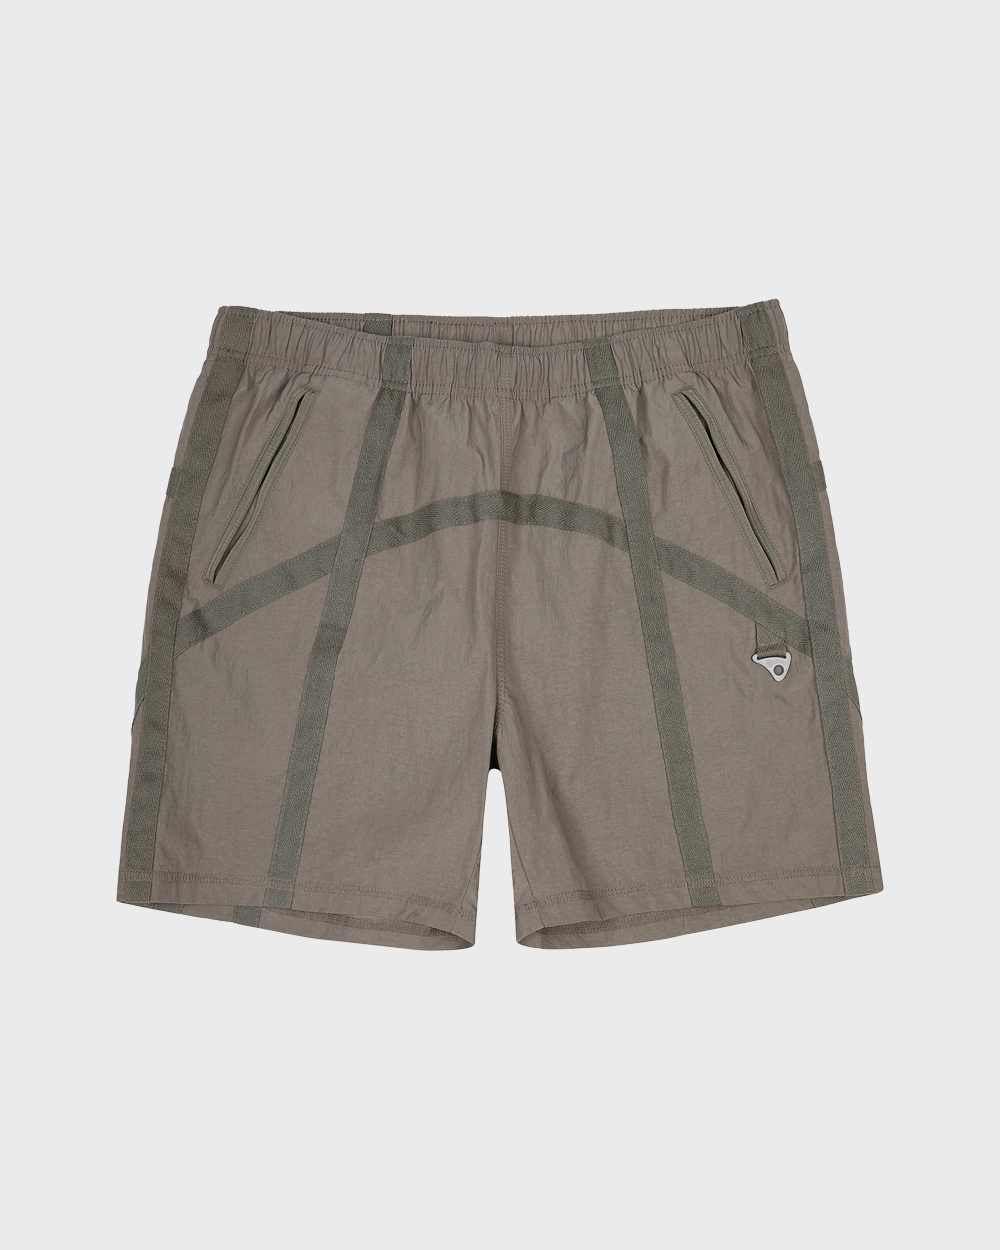 Camper’s Shorts for Light Hiking (Brown)